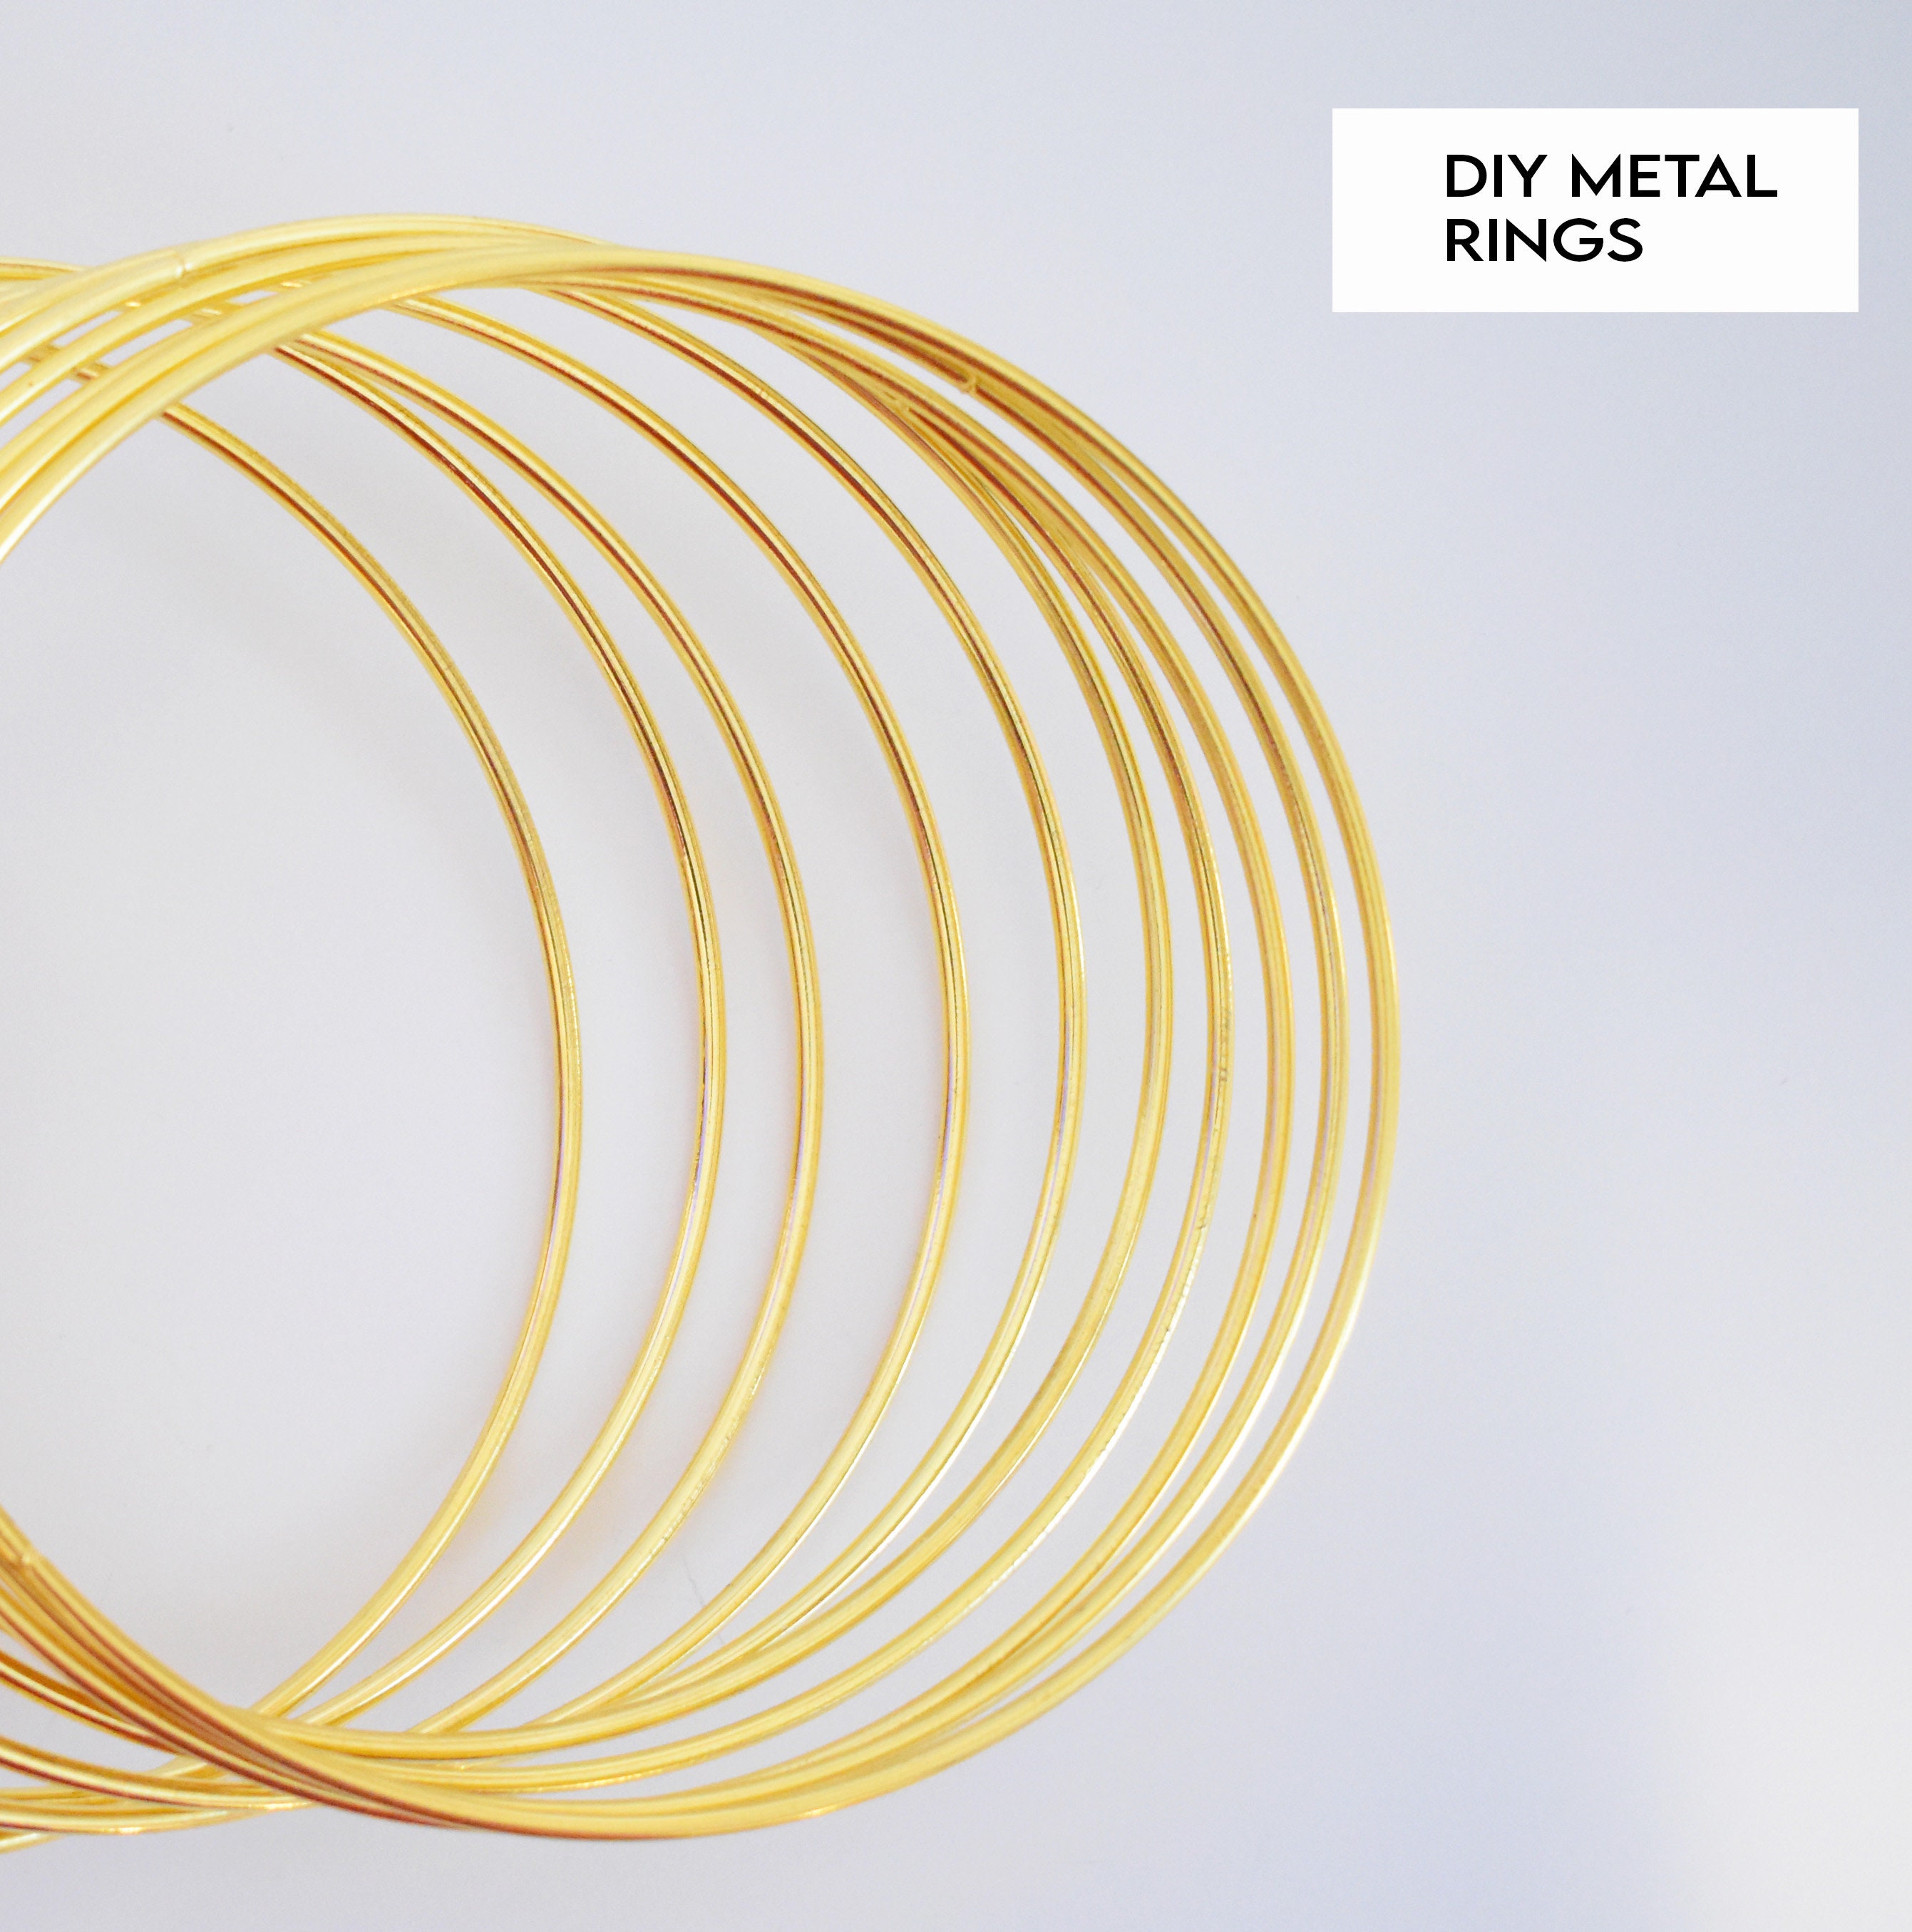 Metal Rings, Macrame Ring, Stainless Steel Ring, Macrame Supplies,  Stainless Metal Ring, DIY Plant Hanger Rings, 2.5 Inch Stainless Ring 